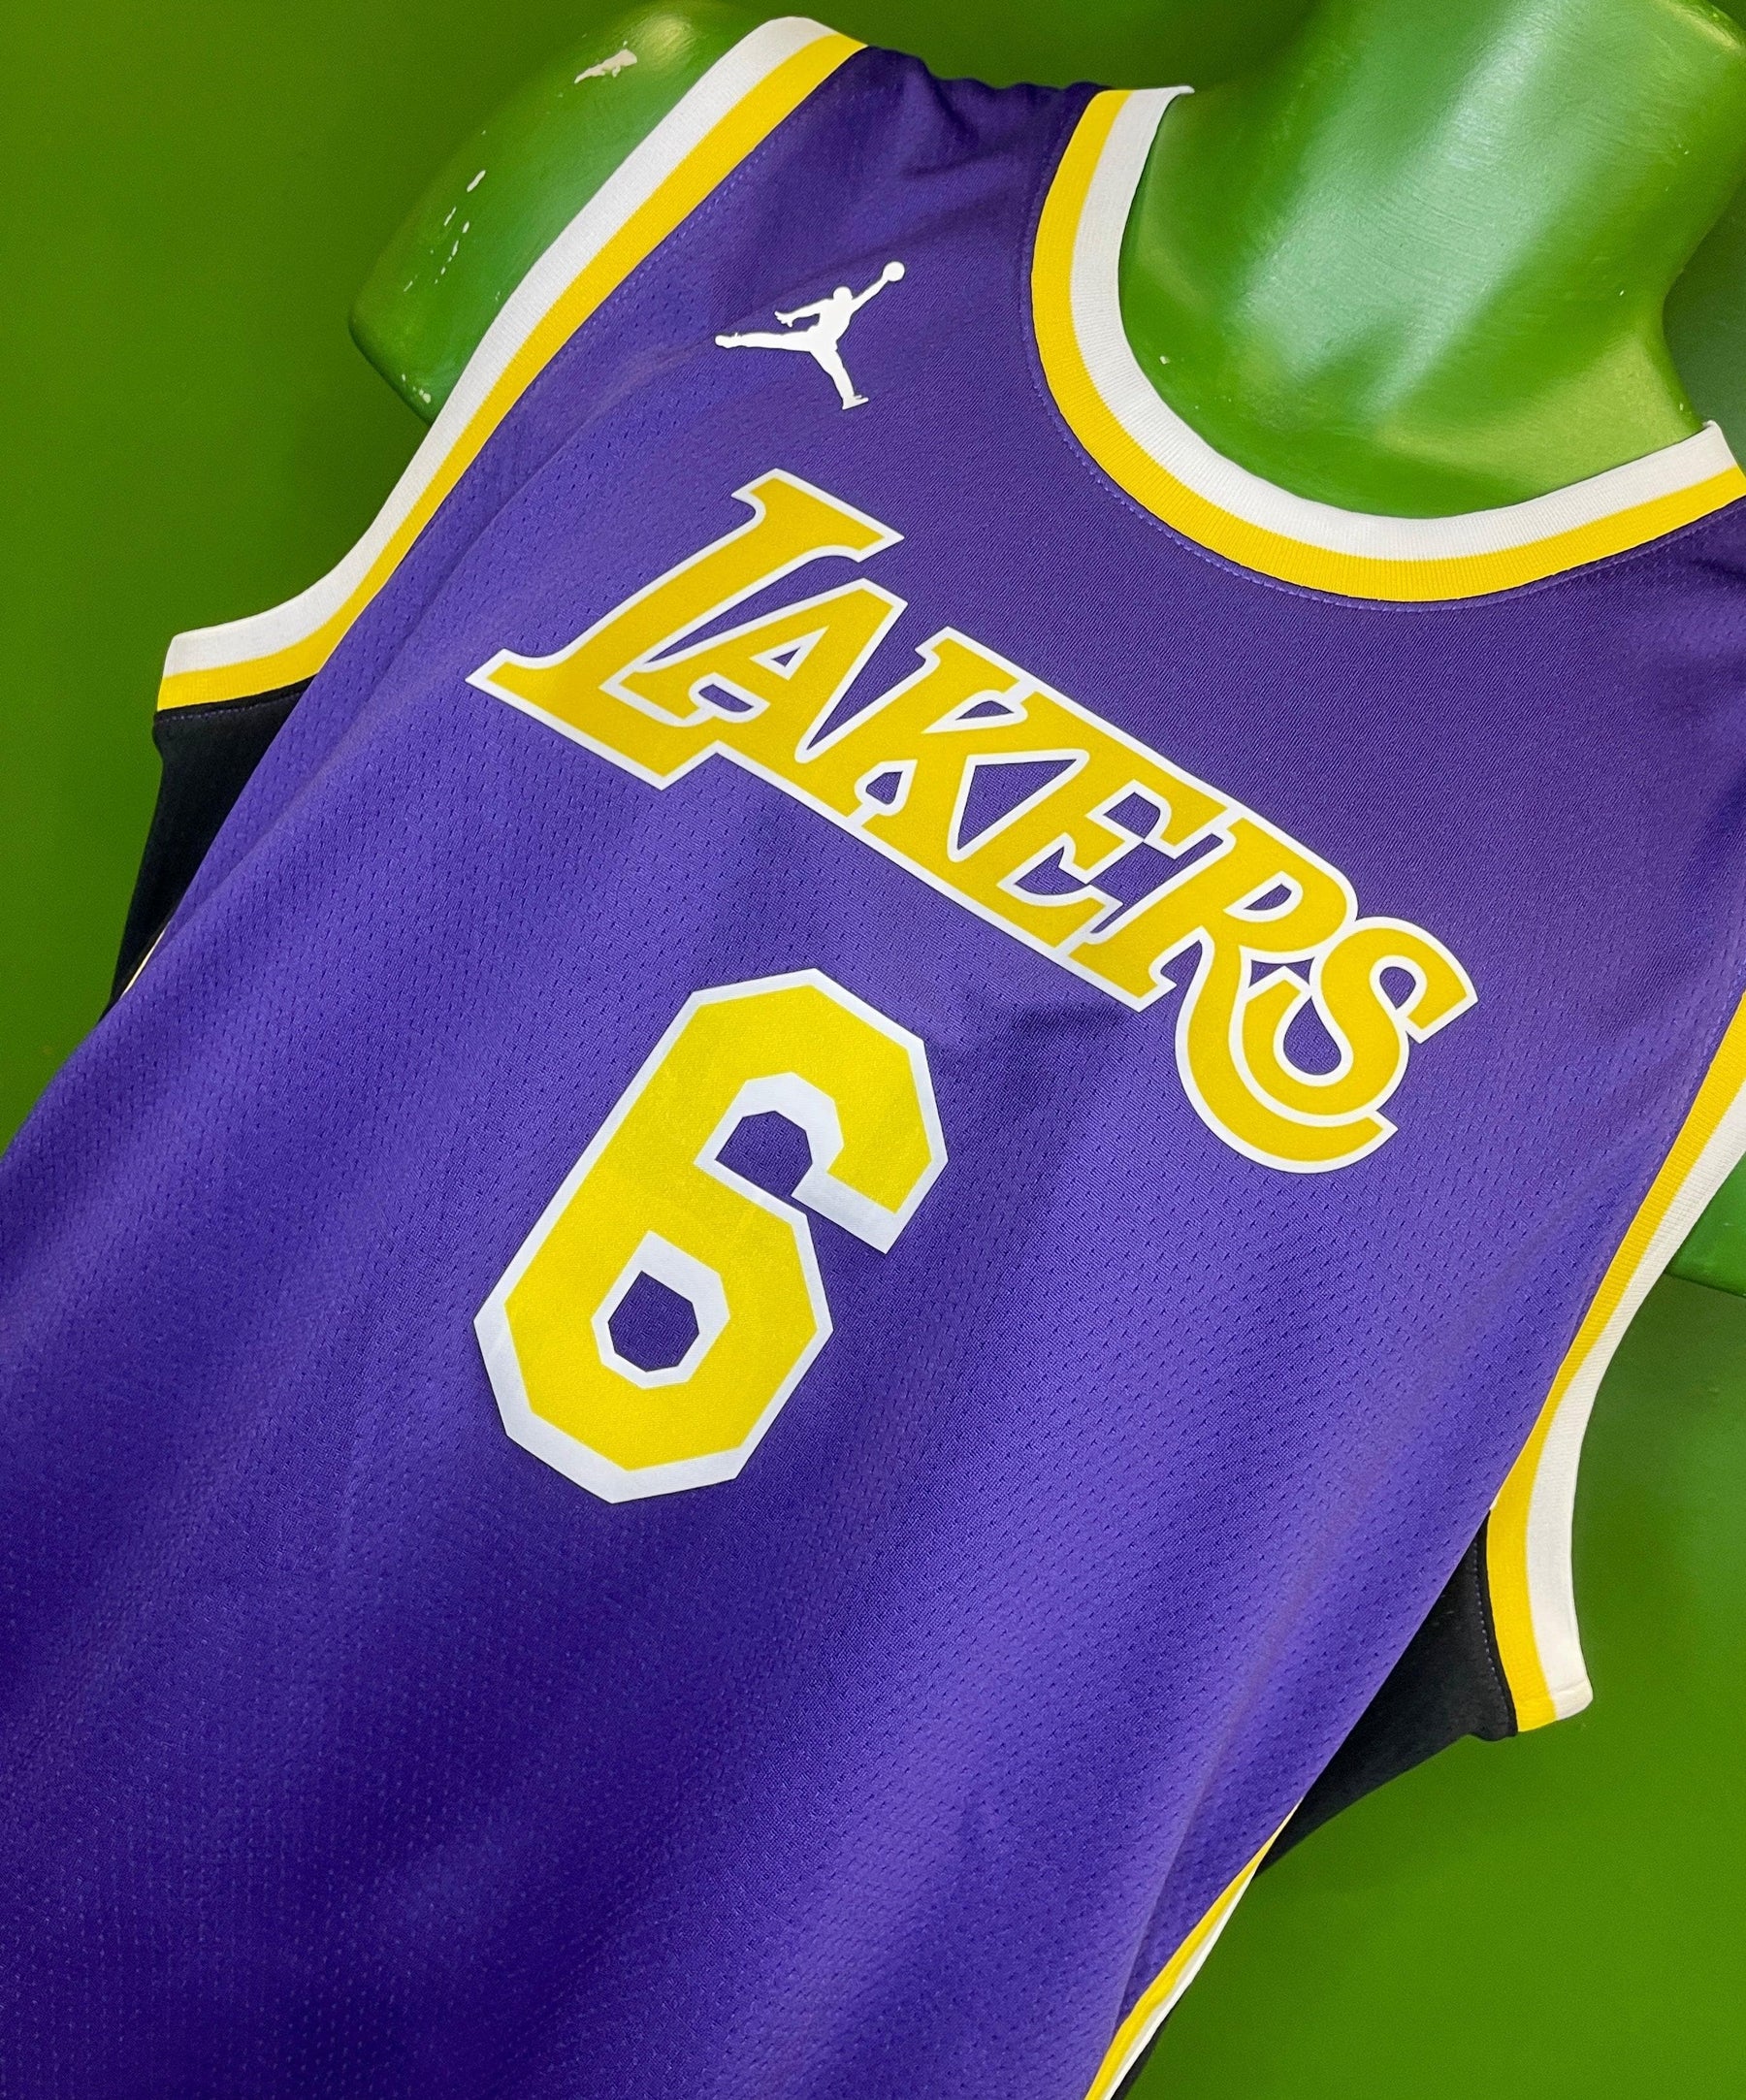 Youth Los Angeles Lakers LeBron James Nike Purple 2021/22